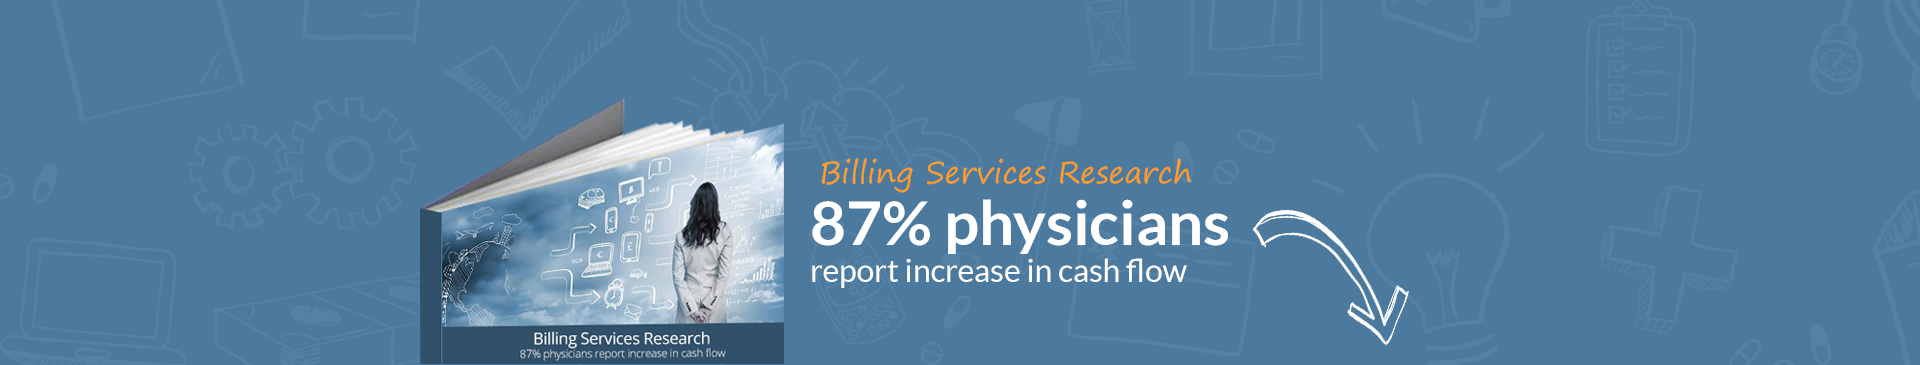 Medical Billing Services Research - Free Download | CureMD